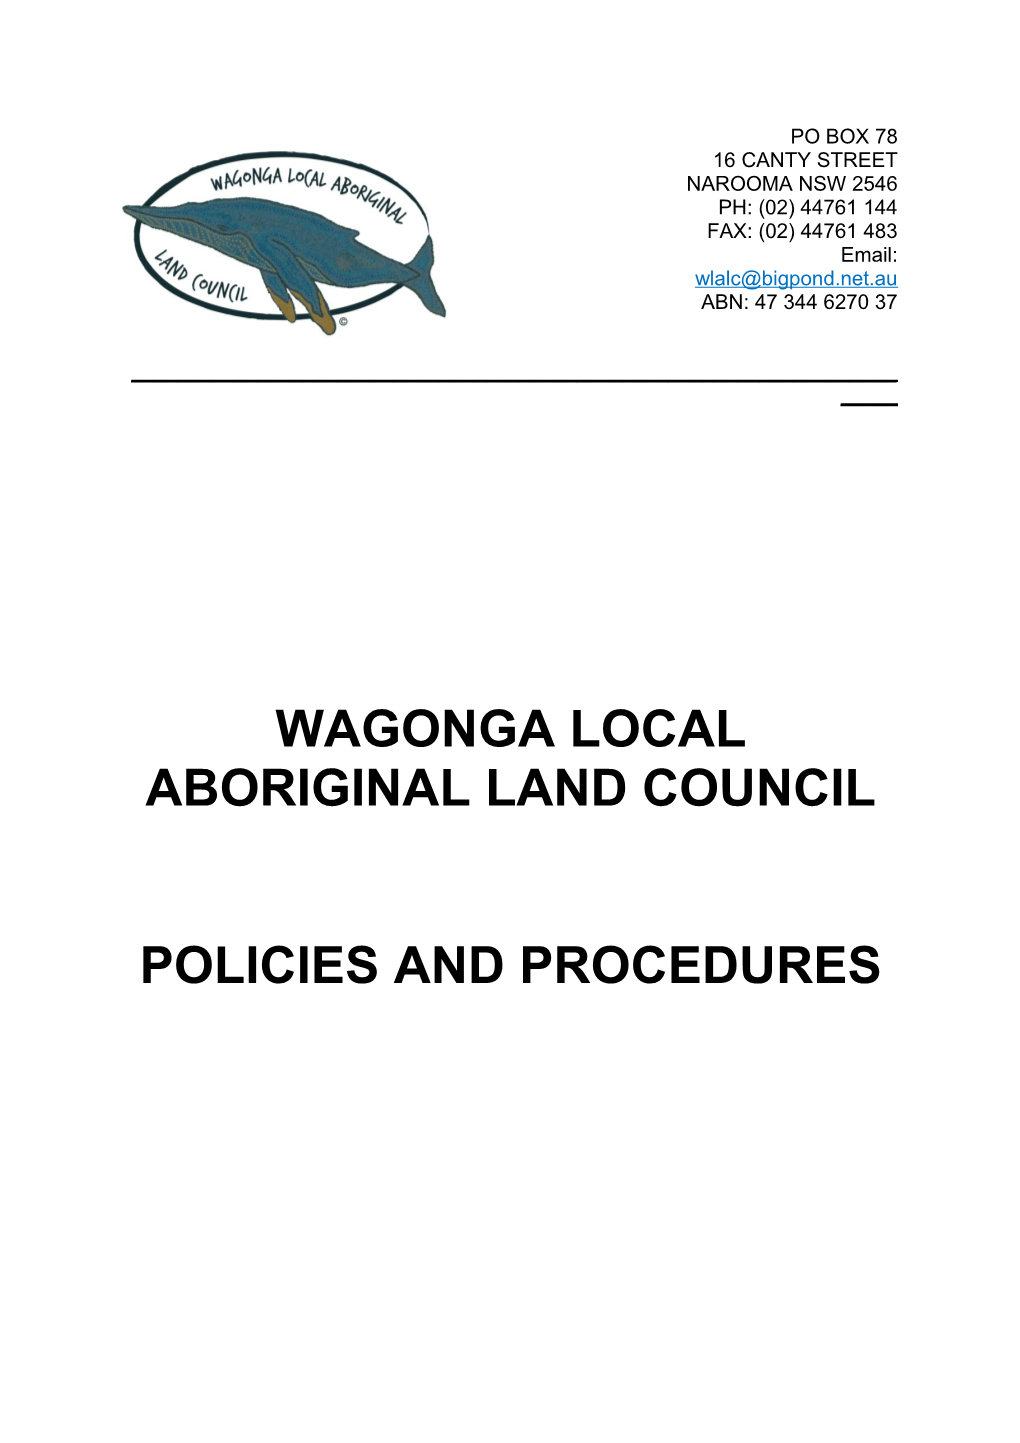 Wagonga Local Aboriginal Land Council